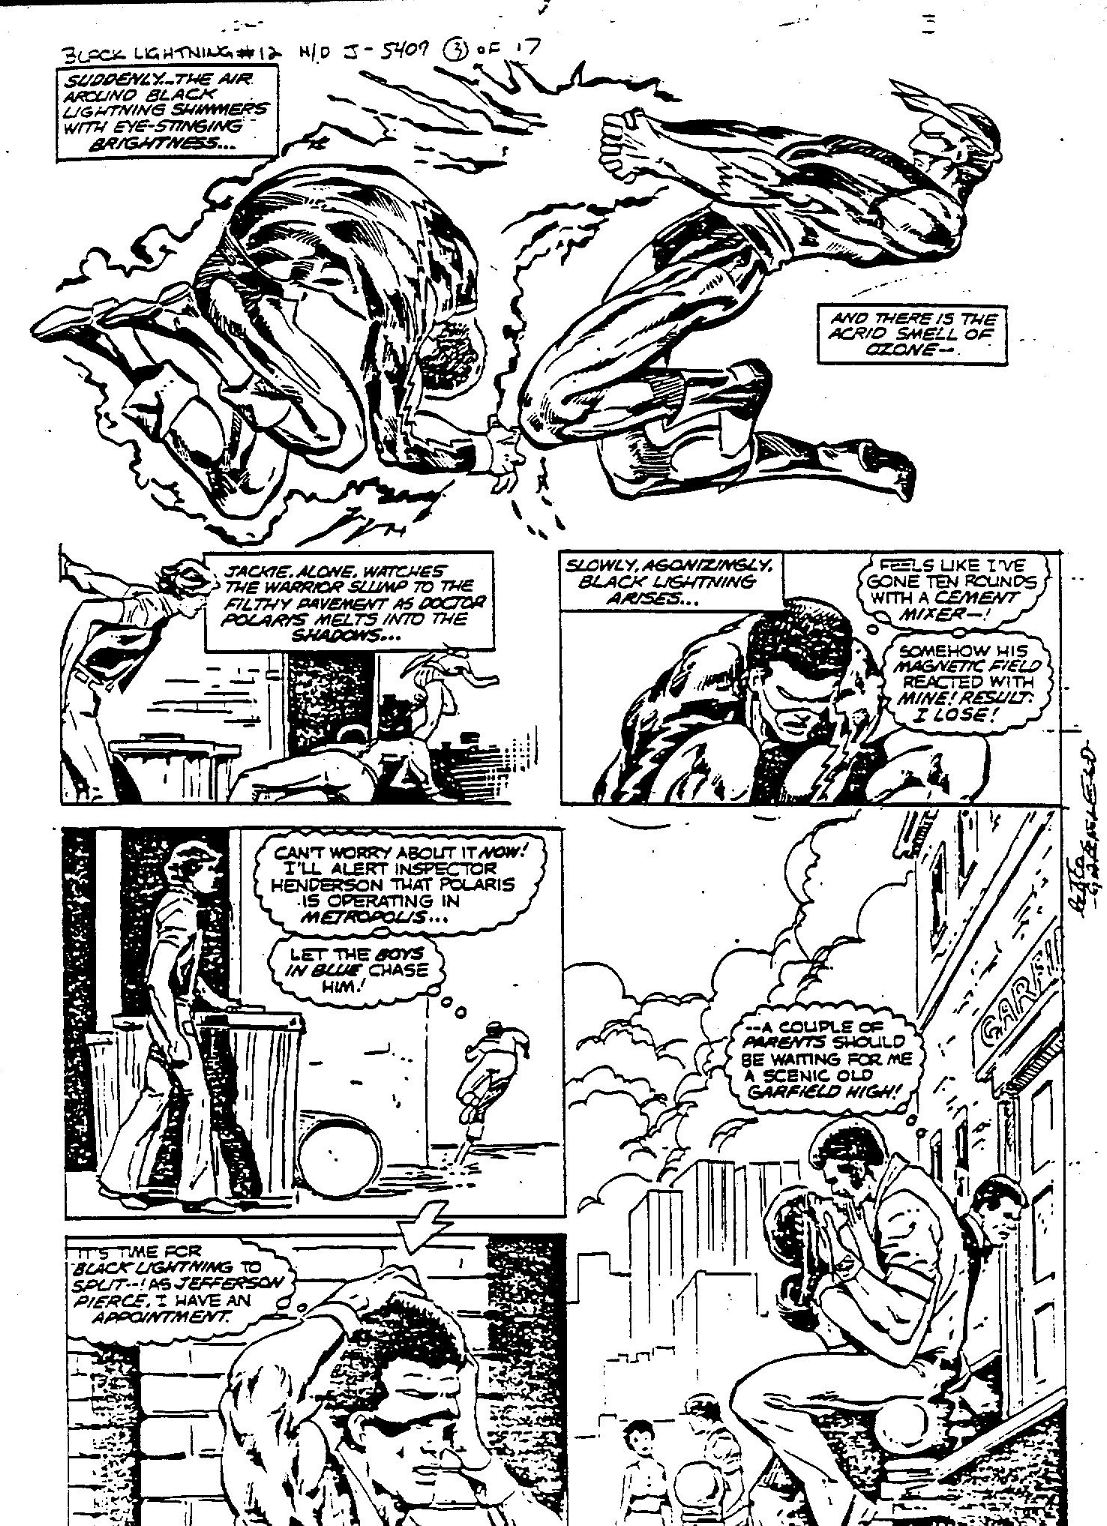 Read online Black Lightning comic -  Issue #12 - 4